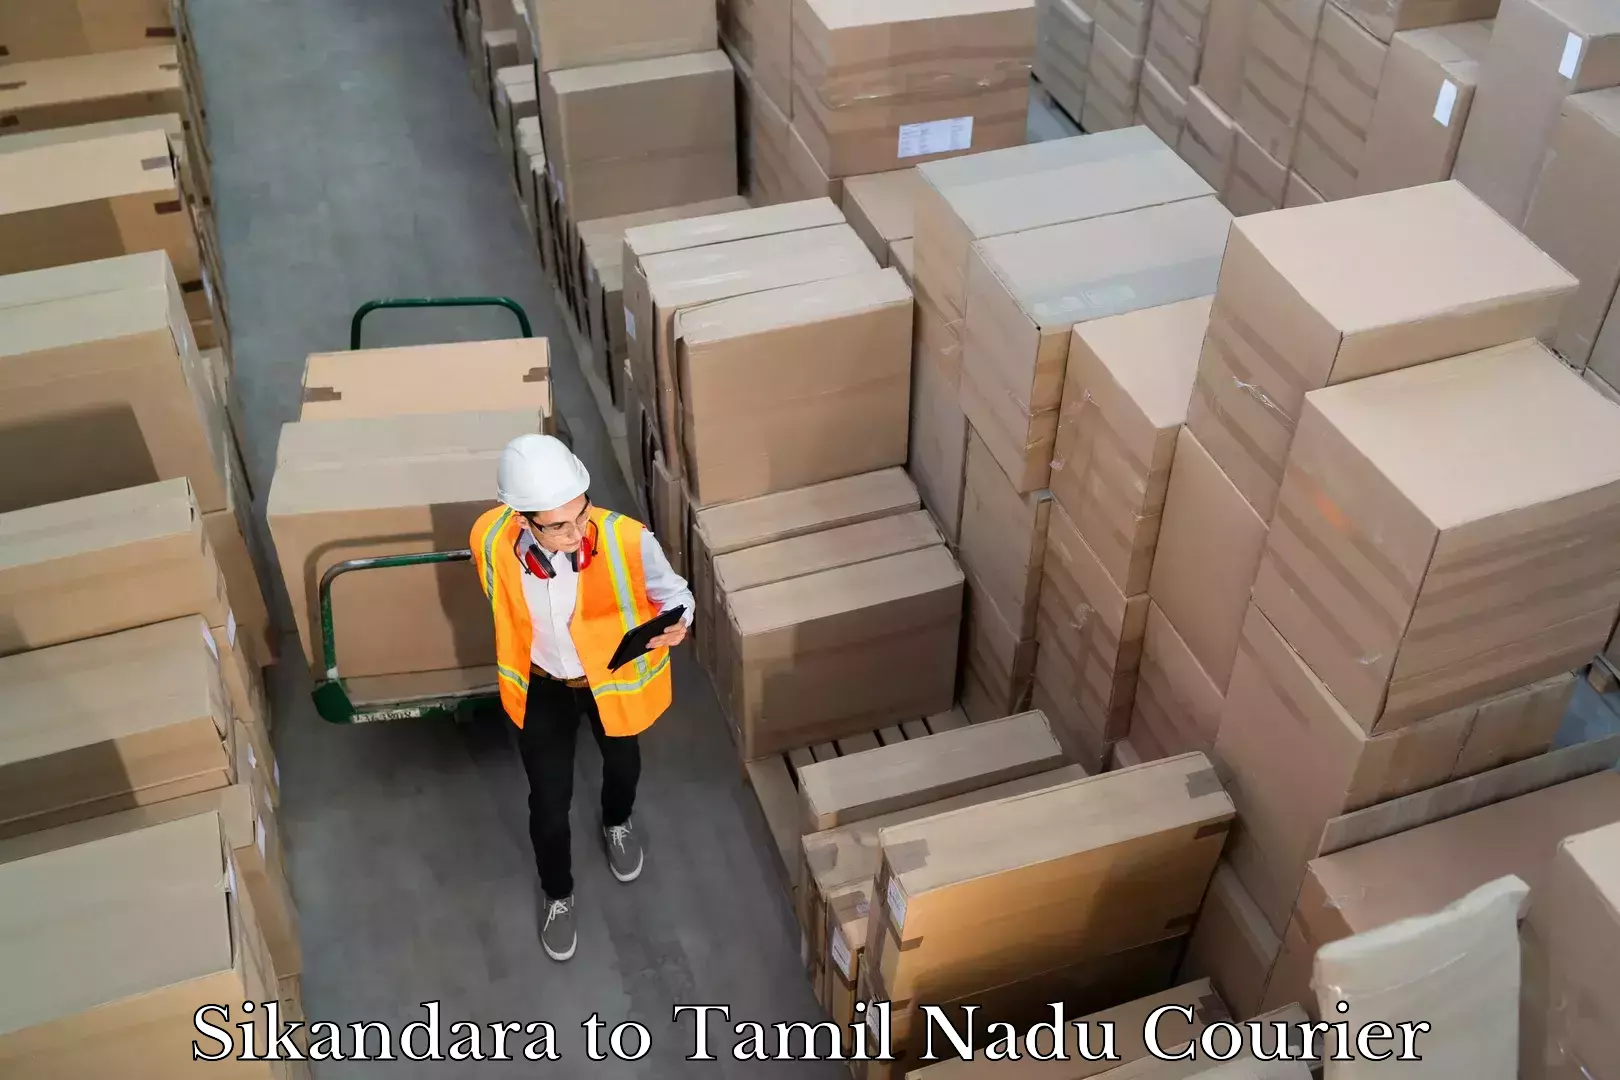 Doorstep delivery service Sikandara to Tamil Nadu